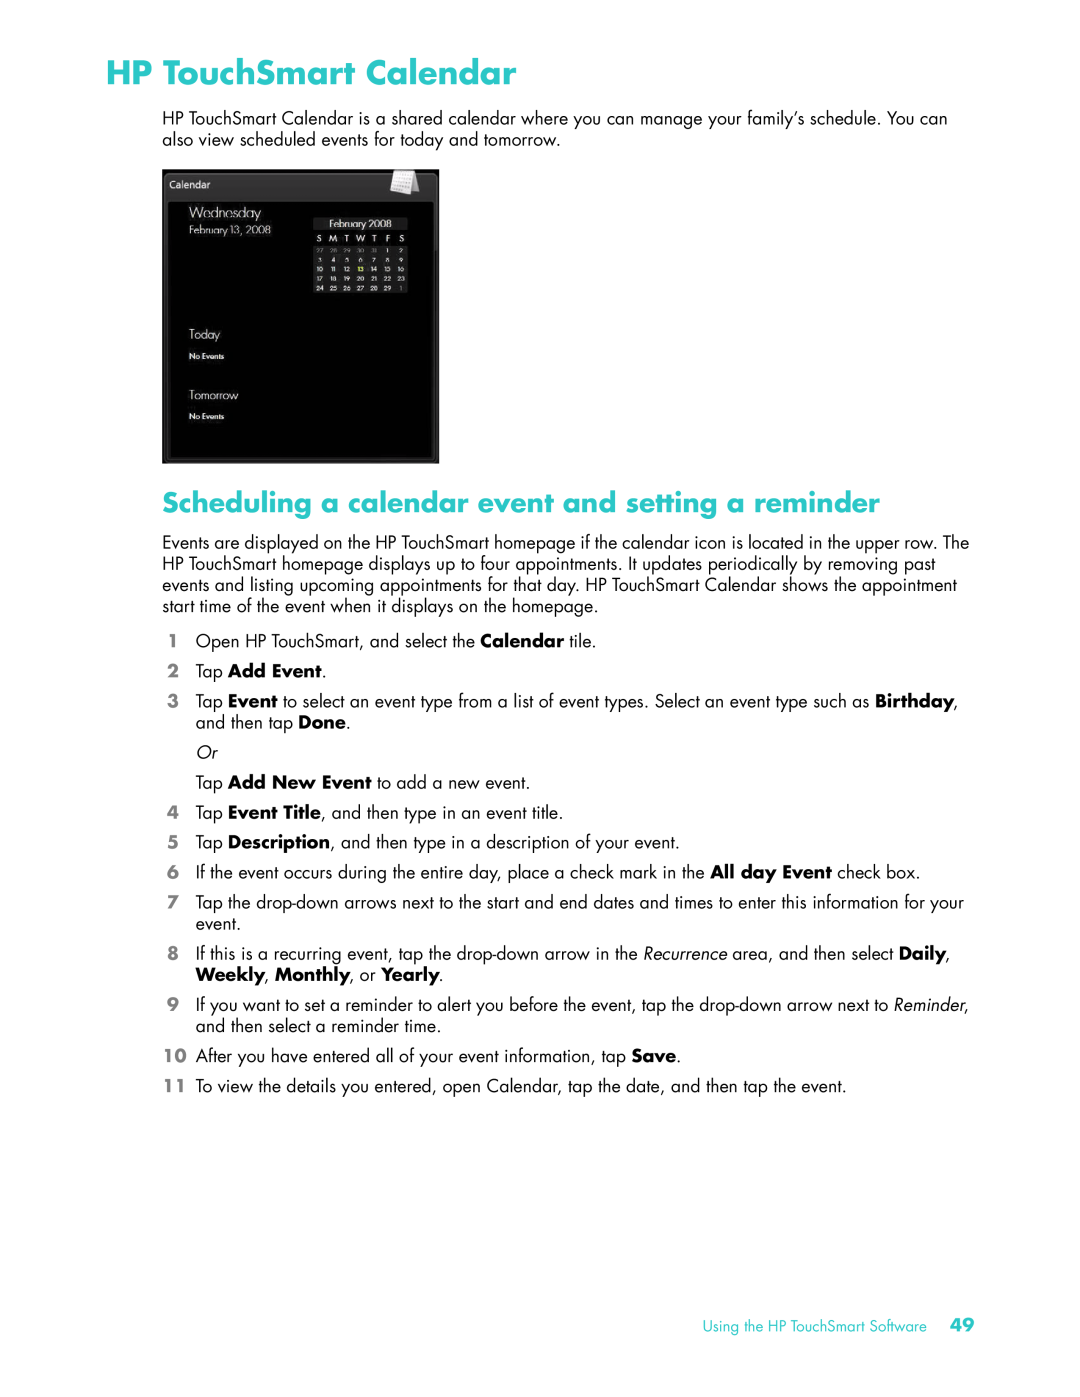 HP 22 Inch KQ437AA manual HP TouchSmart Calendar, Scheduling a calendar event and setting a reminder, Tap Add Event 